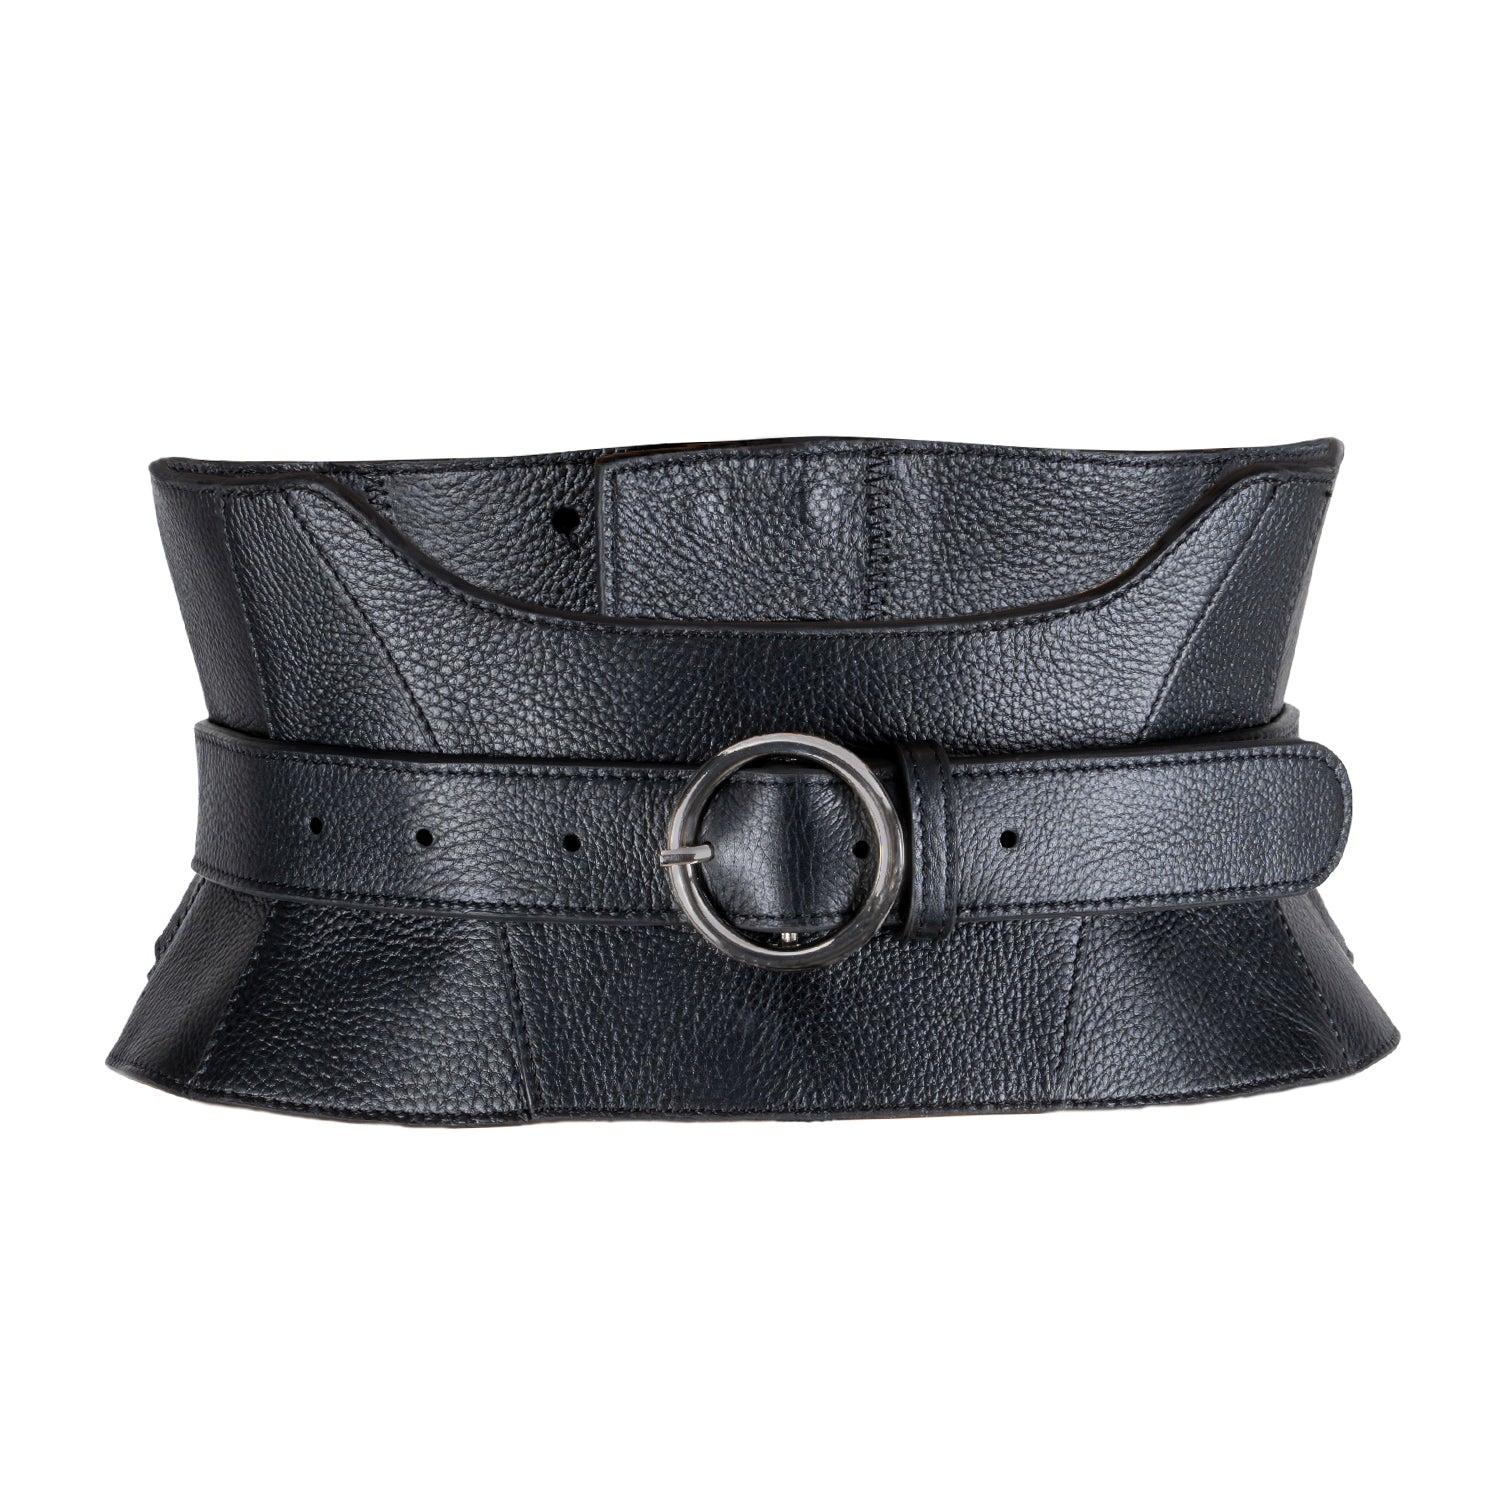 Zheng Leather Structured Corset Belt